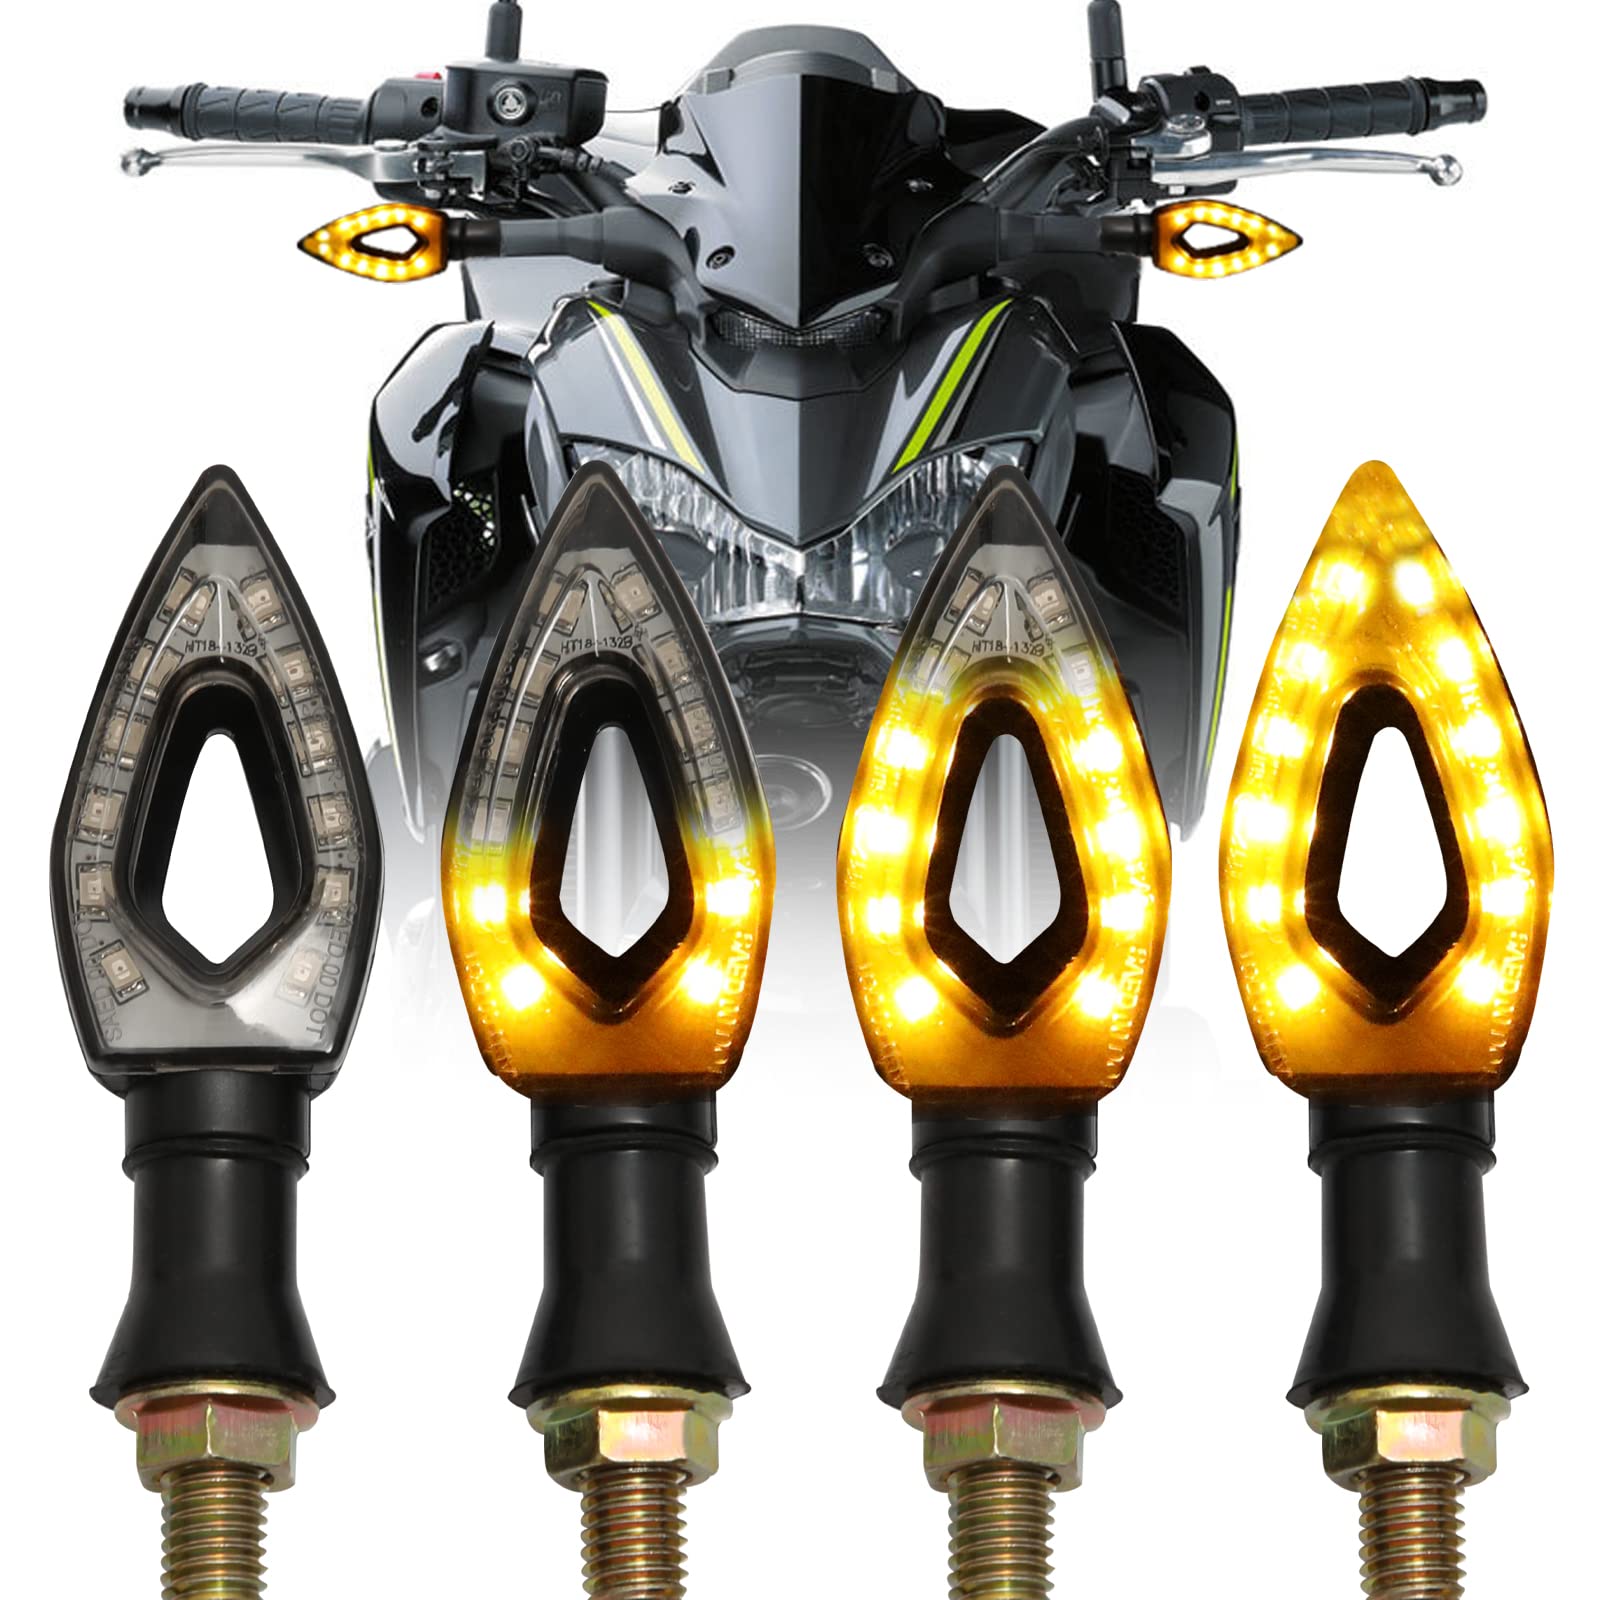 JMTBNO 4PCs Mini LED Blinker Motorrad Wasserdicht Lampe E geprüft Vorne Hinten Blinker Universal 12V Kompatibel mit Harley Kawasaki Yamaha Suzuki Honda